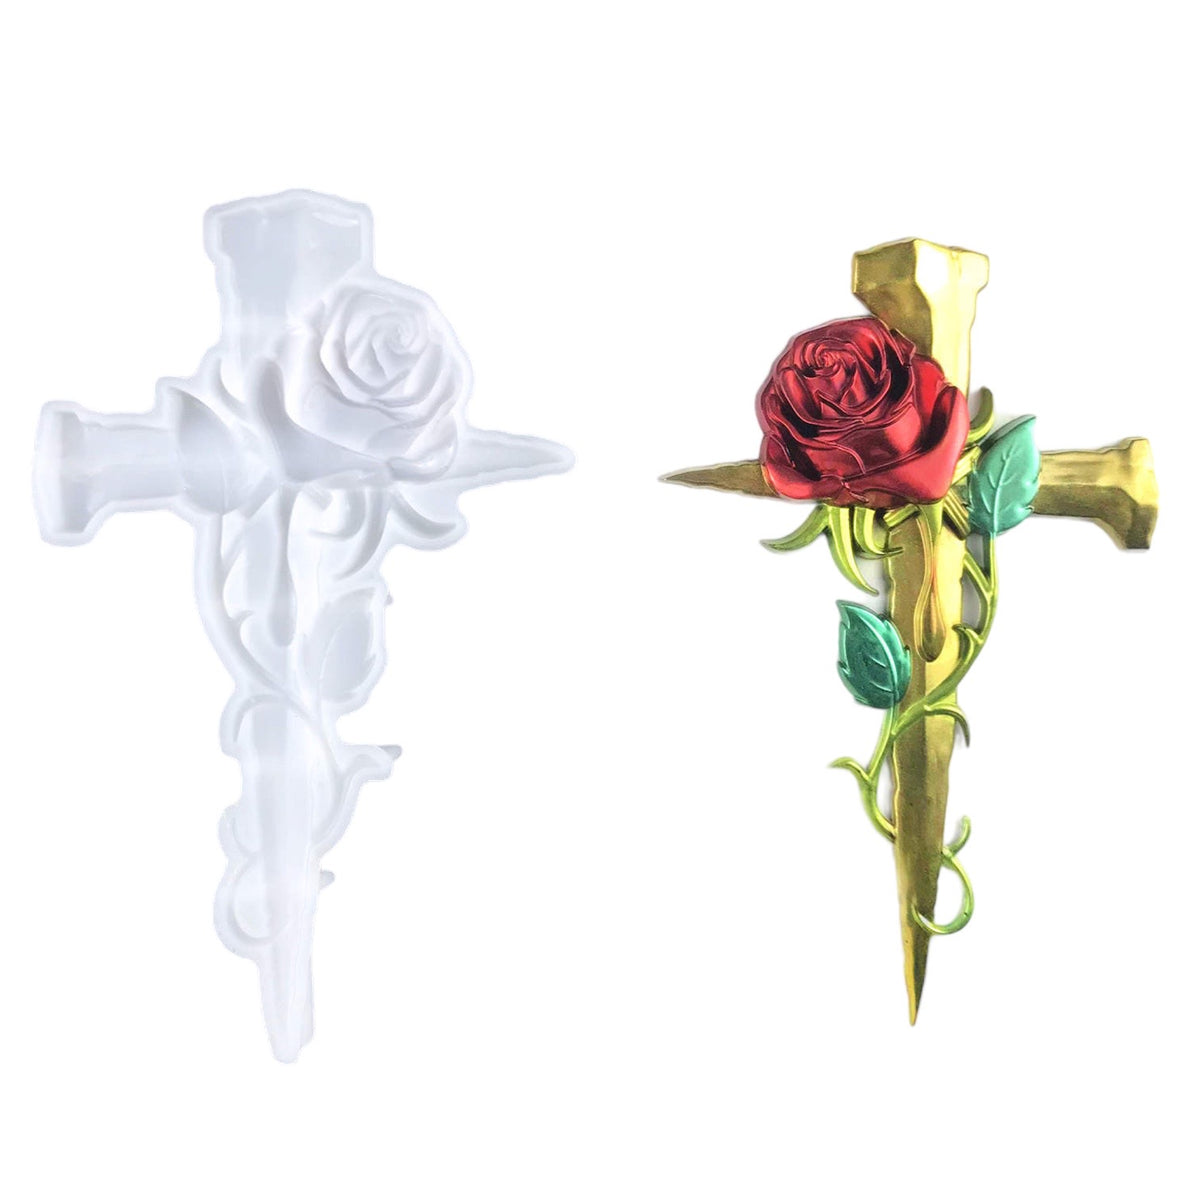 Masonry Nail Cross With Rose Mold for Epoxy Resin Art